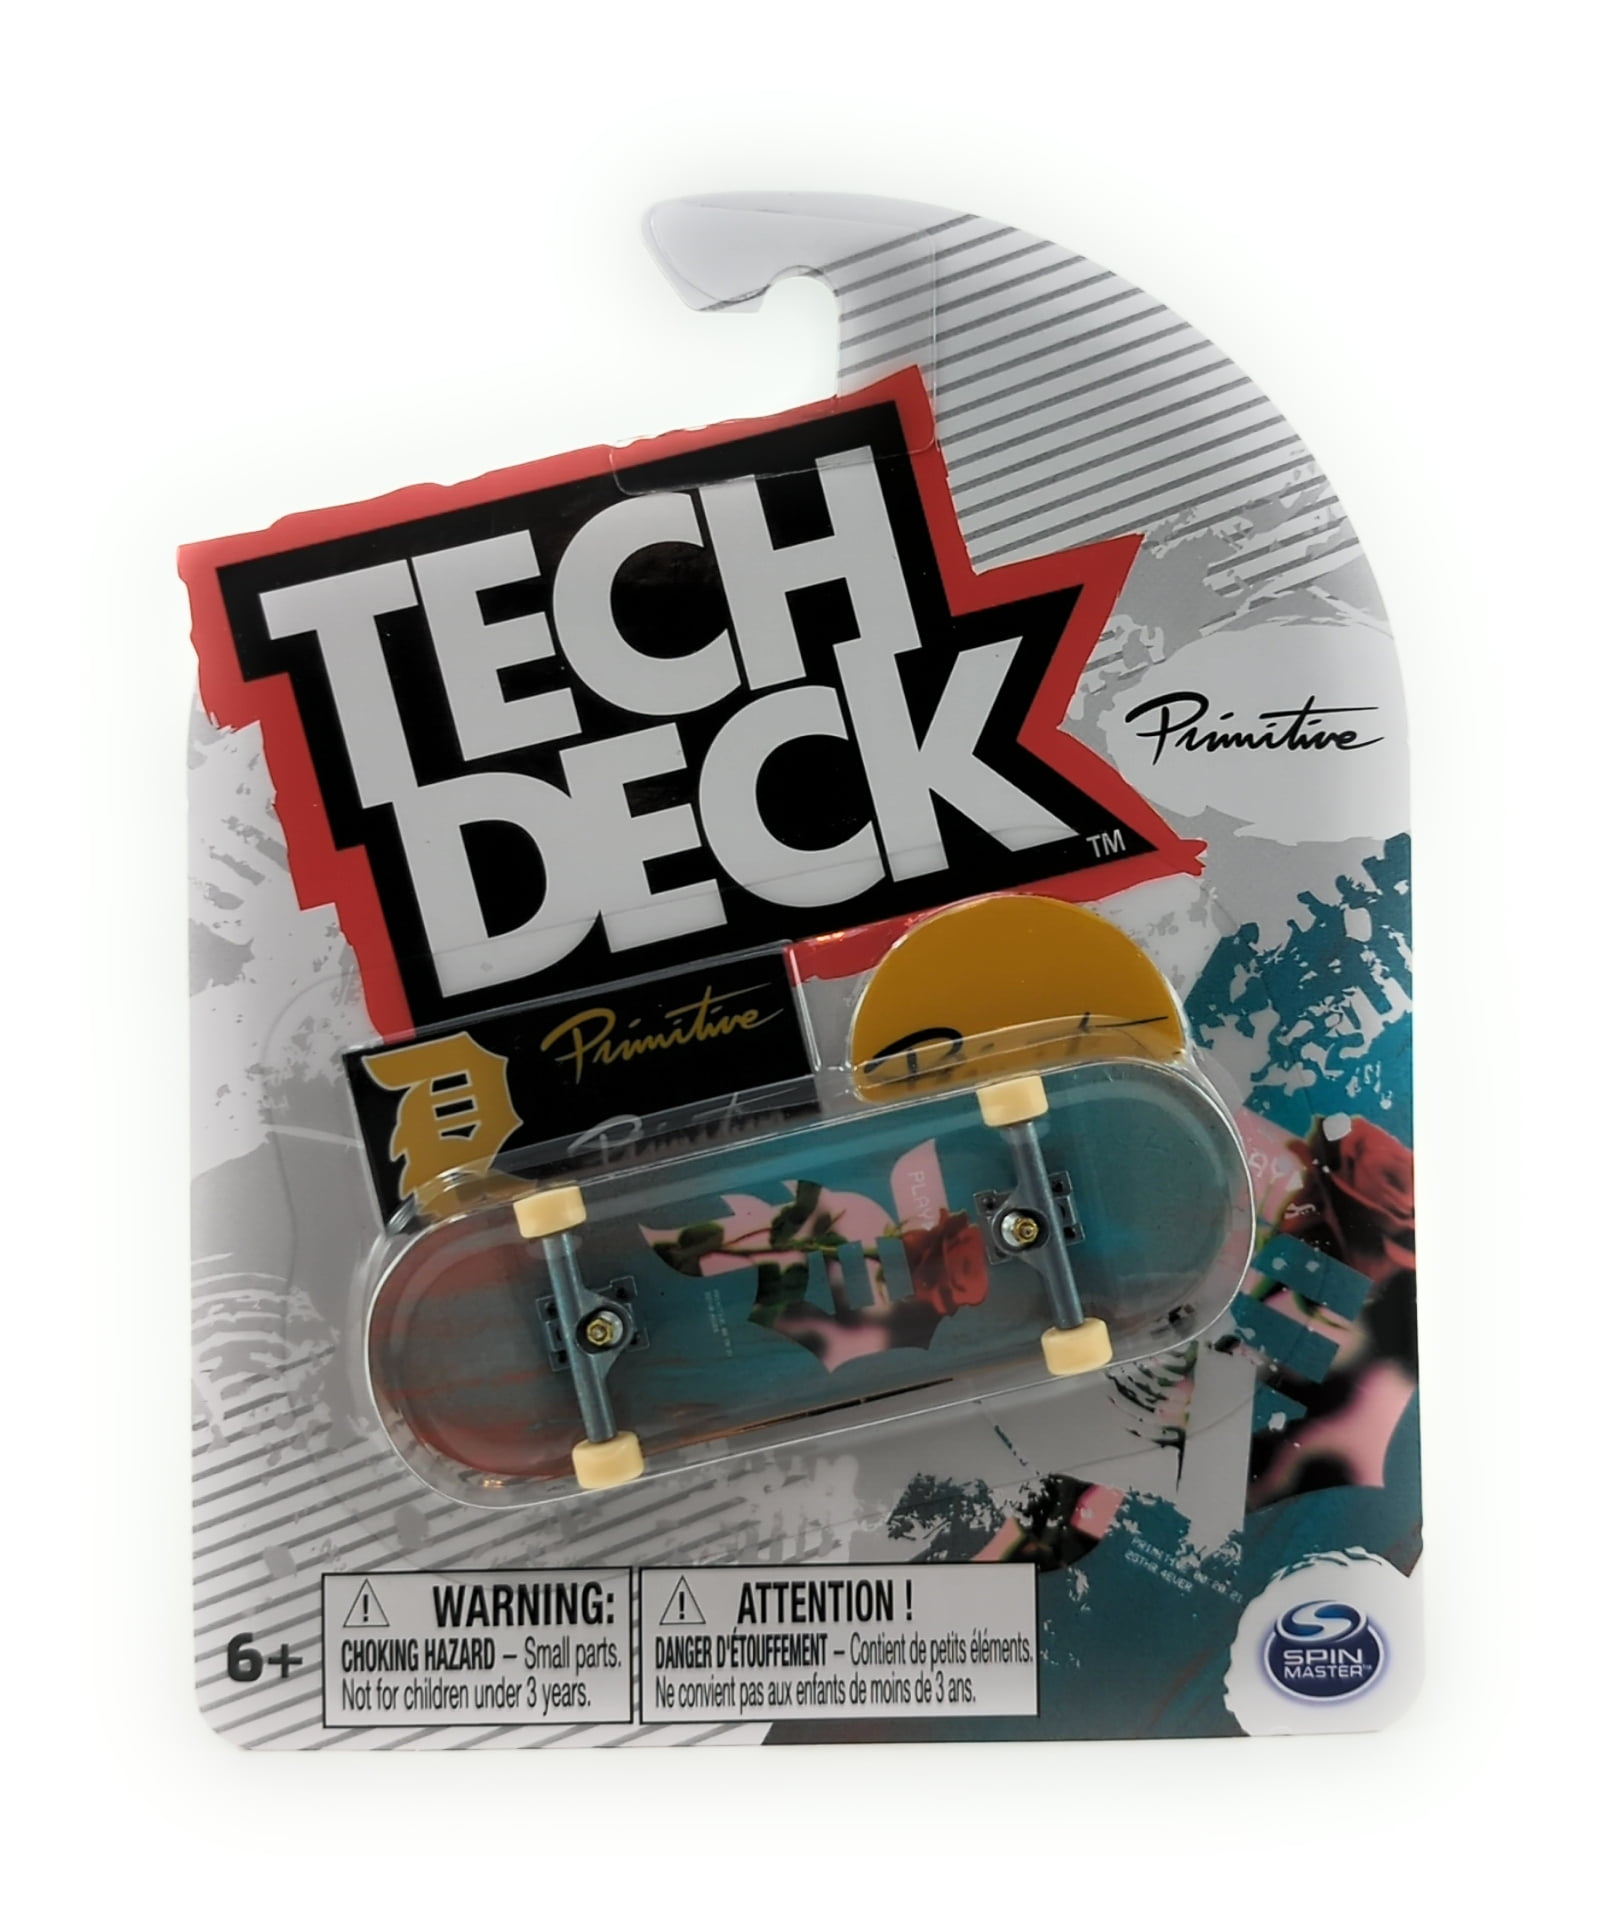 TECH DECK Fingerskate Pack Versus 2 PRIMITIVE